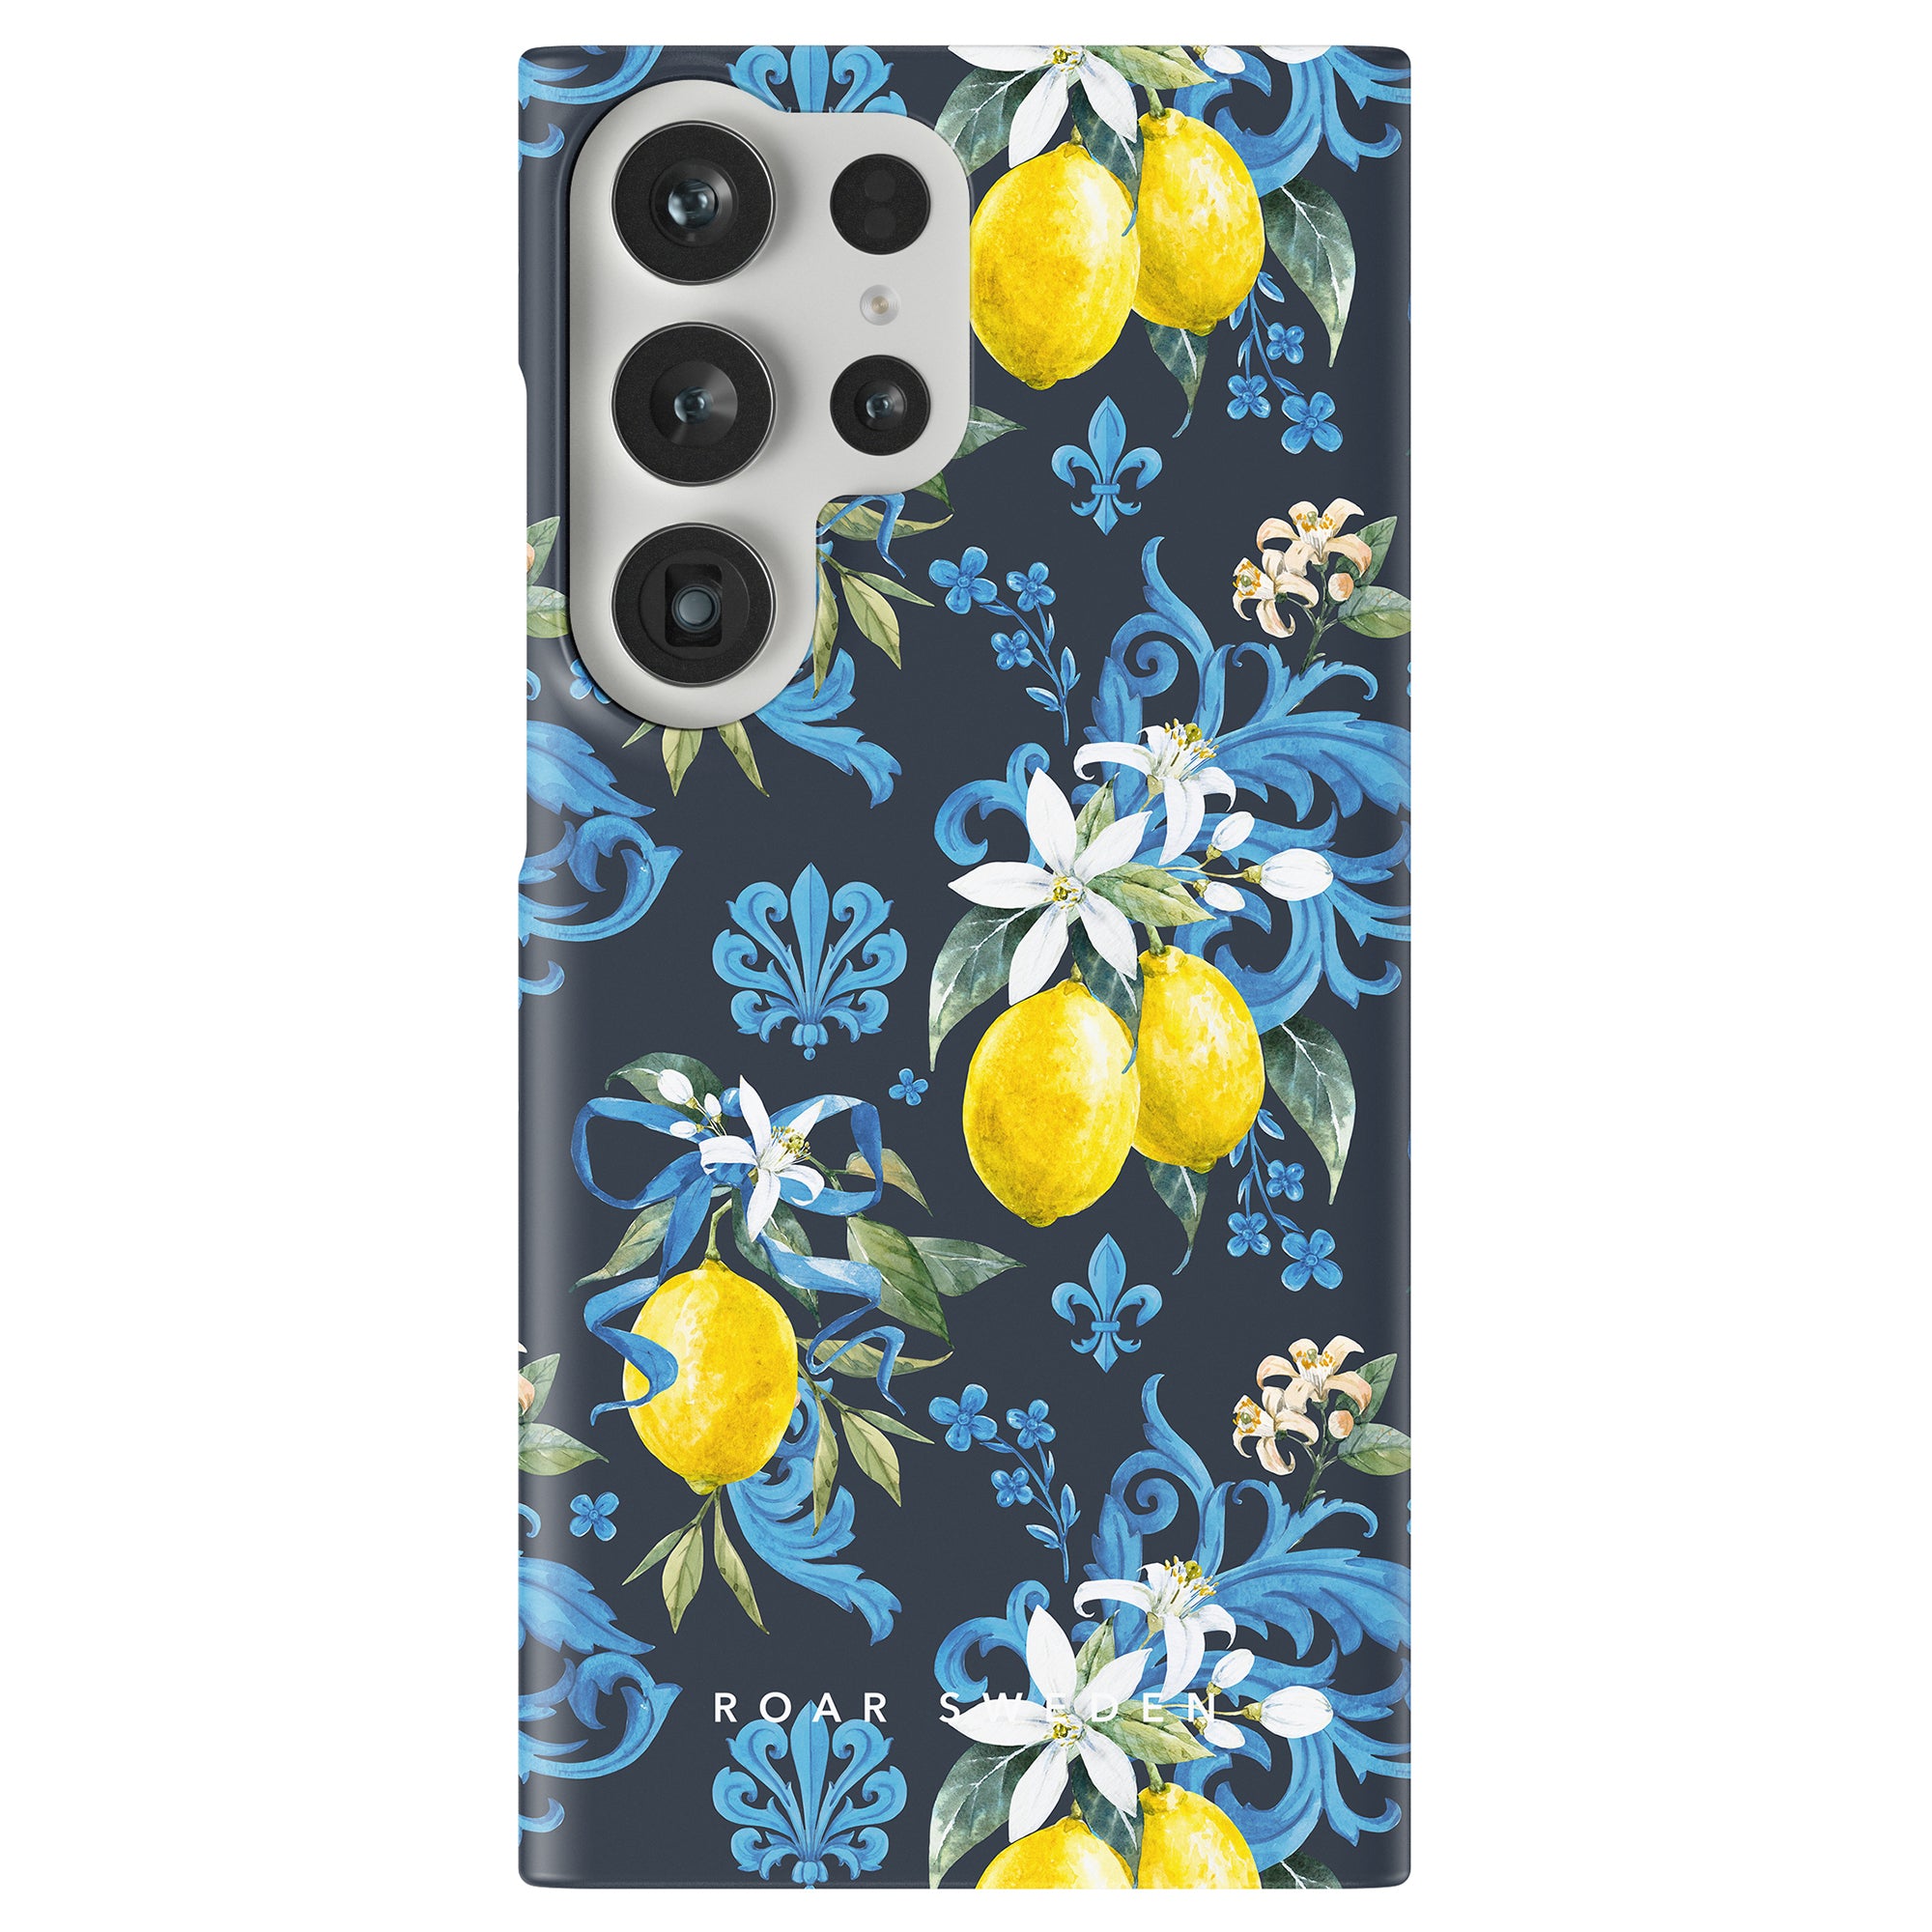 A Toscana - Slim case with a Sicilianska mönster of lemon and floral design on a blue background.